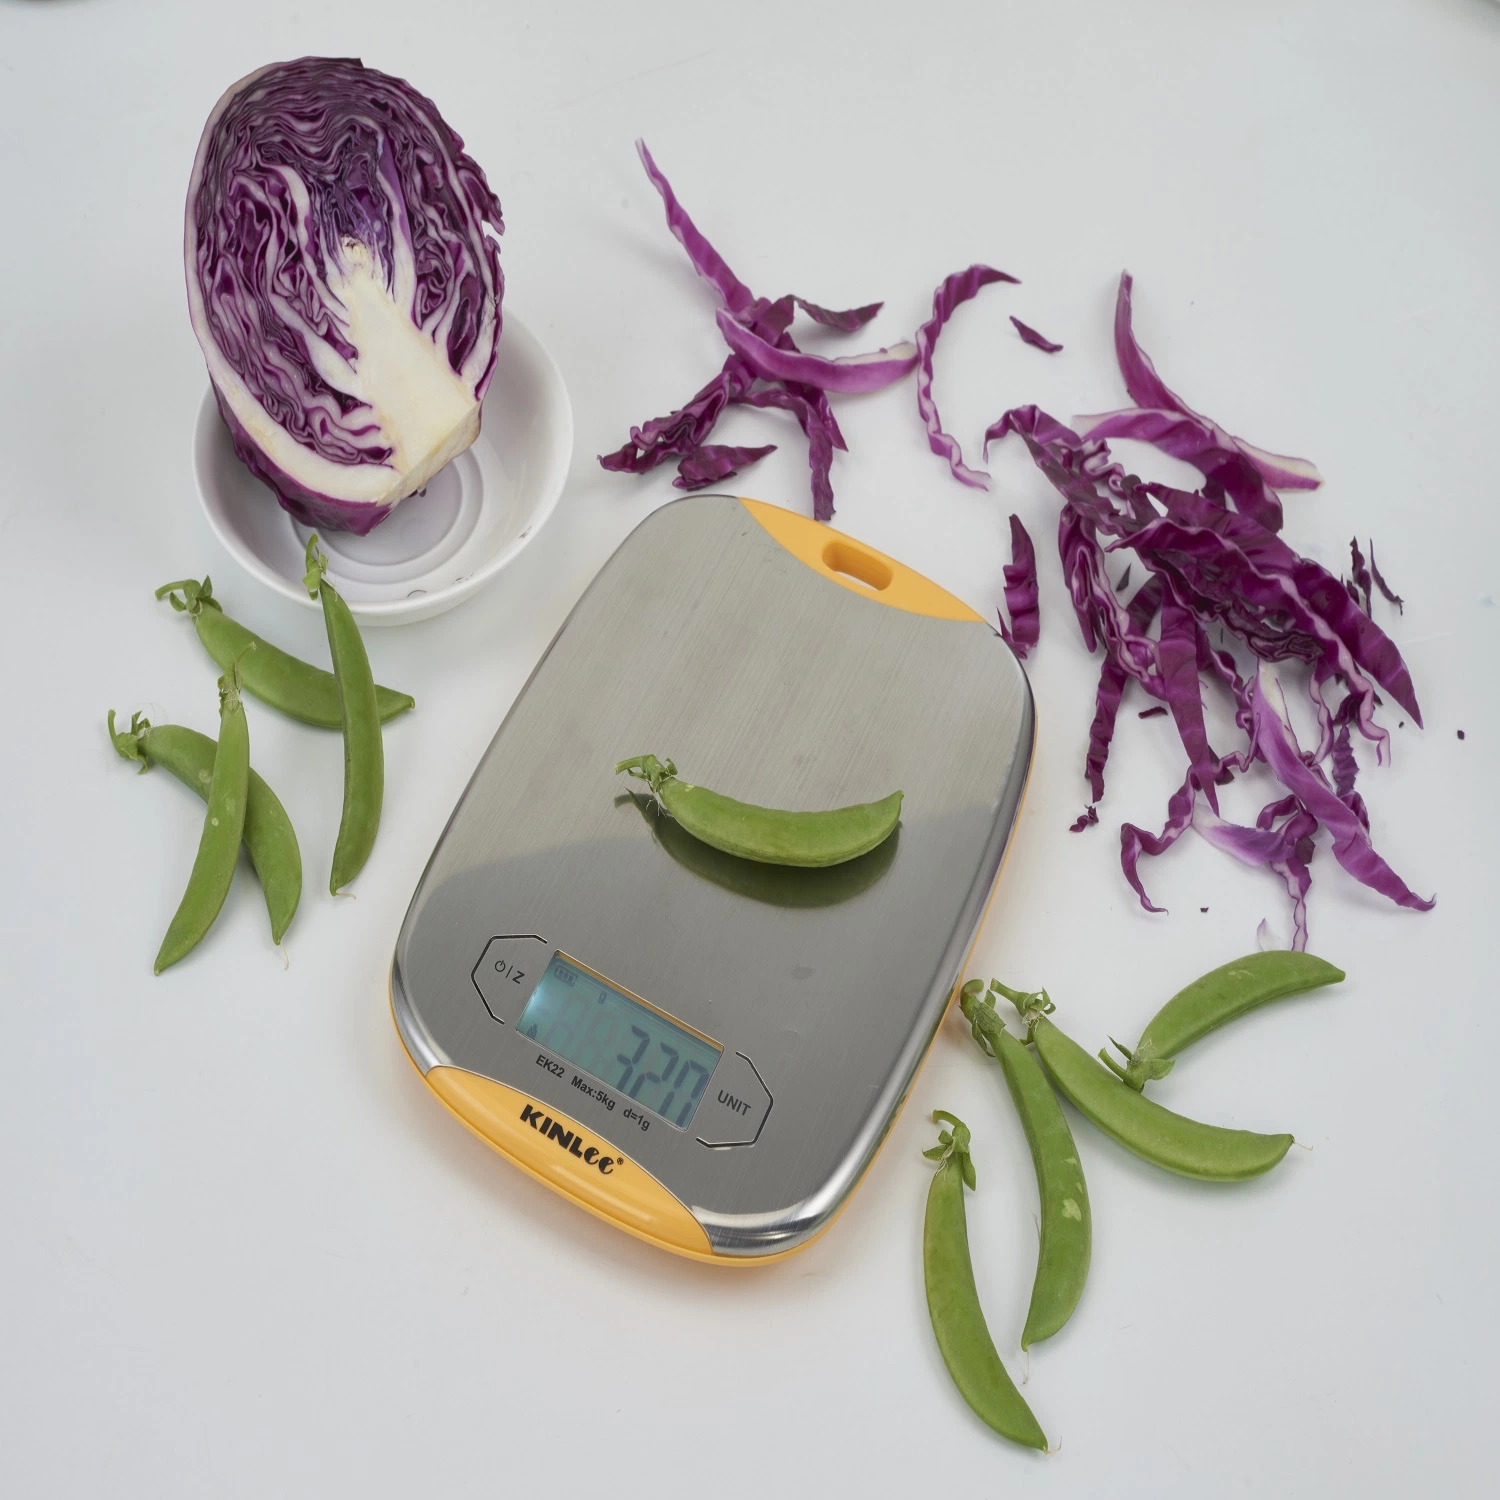 Household Multifunction 5kg Electronic Smart Waging Digital Kitchen Food Weight Skalen